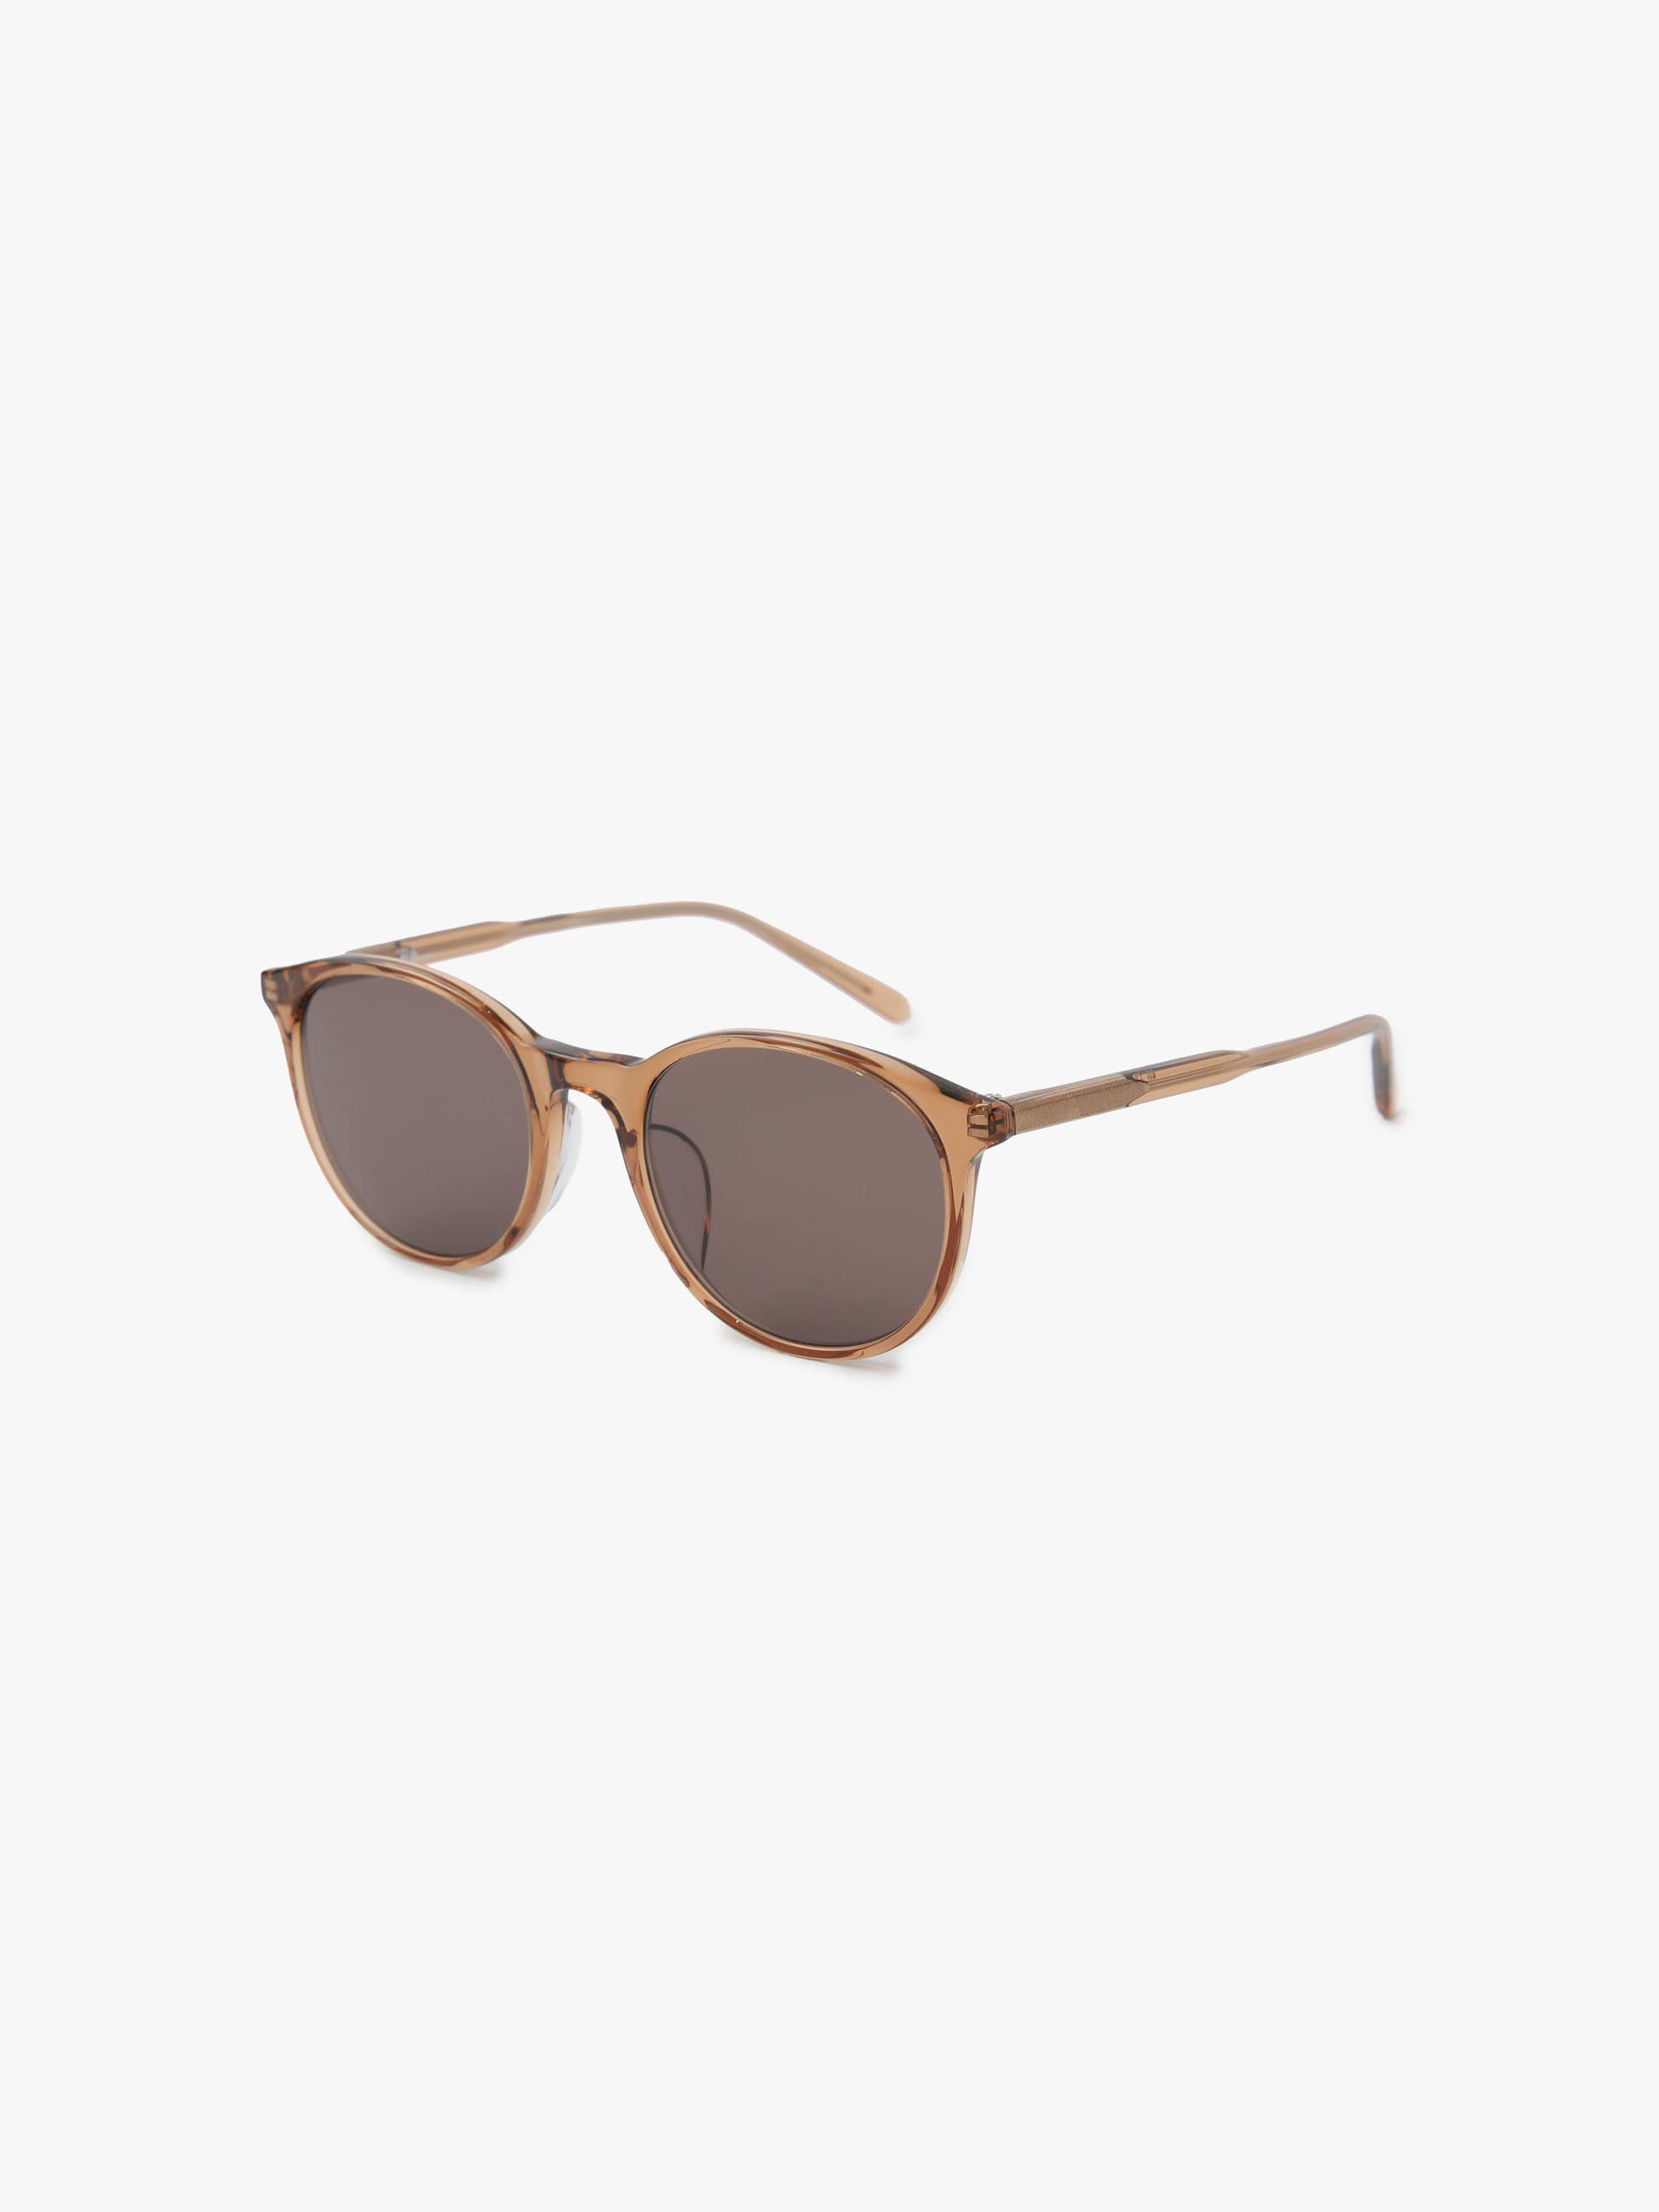 New Boston Sunglasses (Light Brown)｜Ron Herman(ロンハーマン)｜Ron Herman